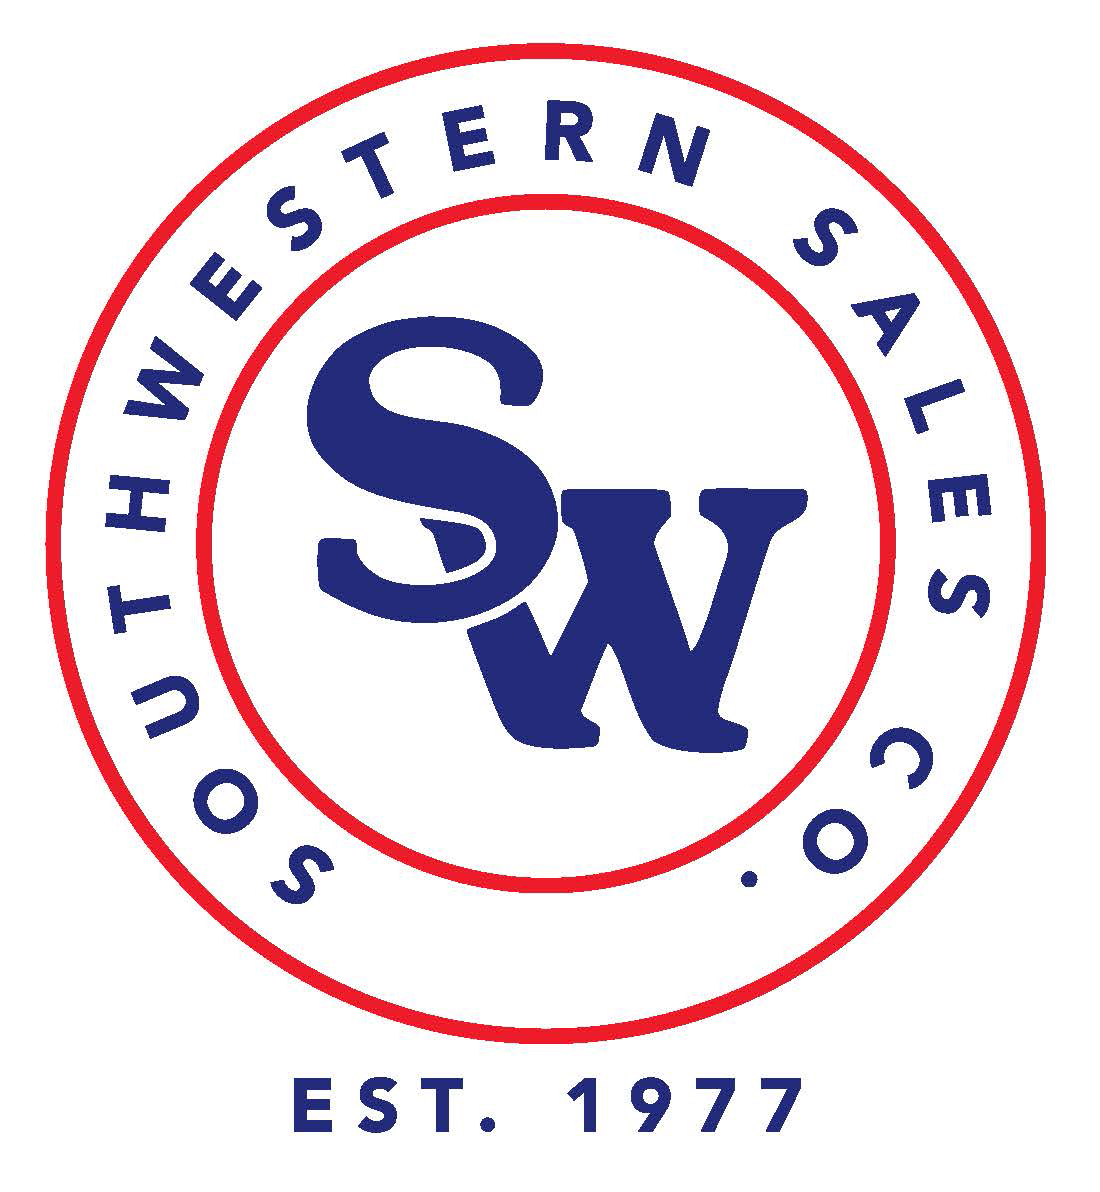 SWS_Logo_RedBlue.jpg logo